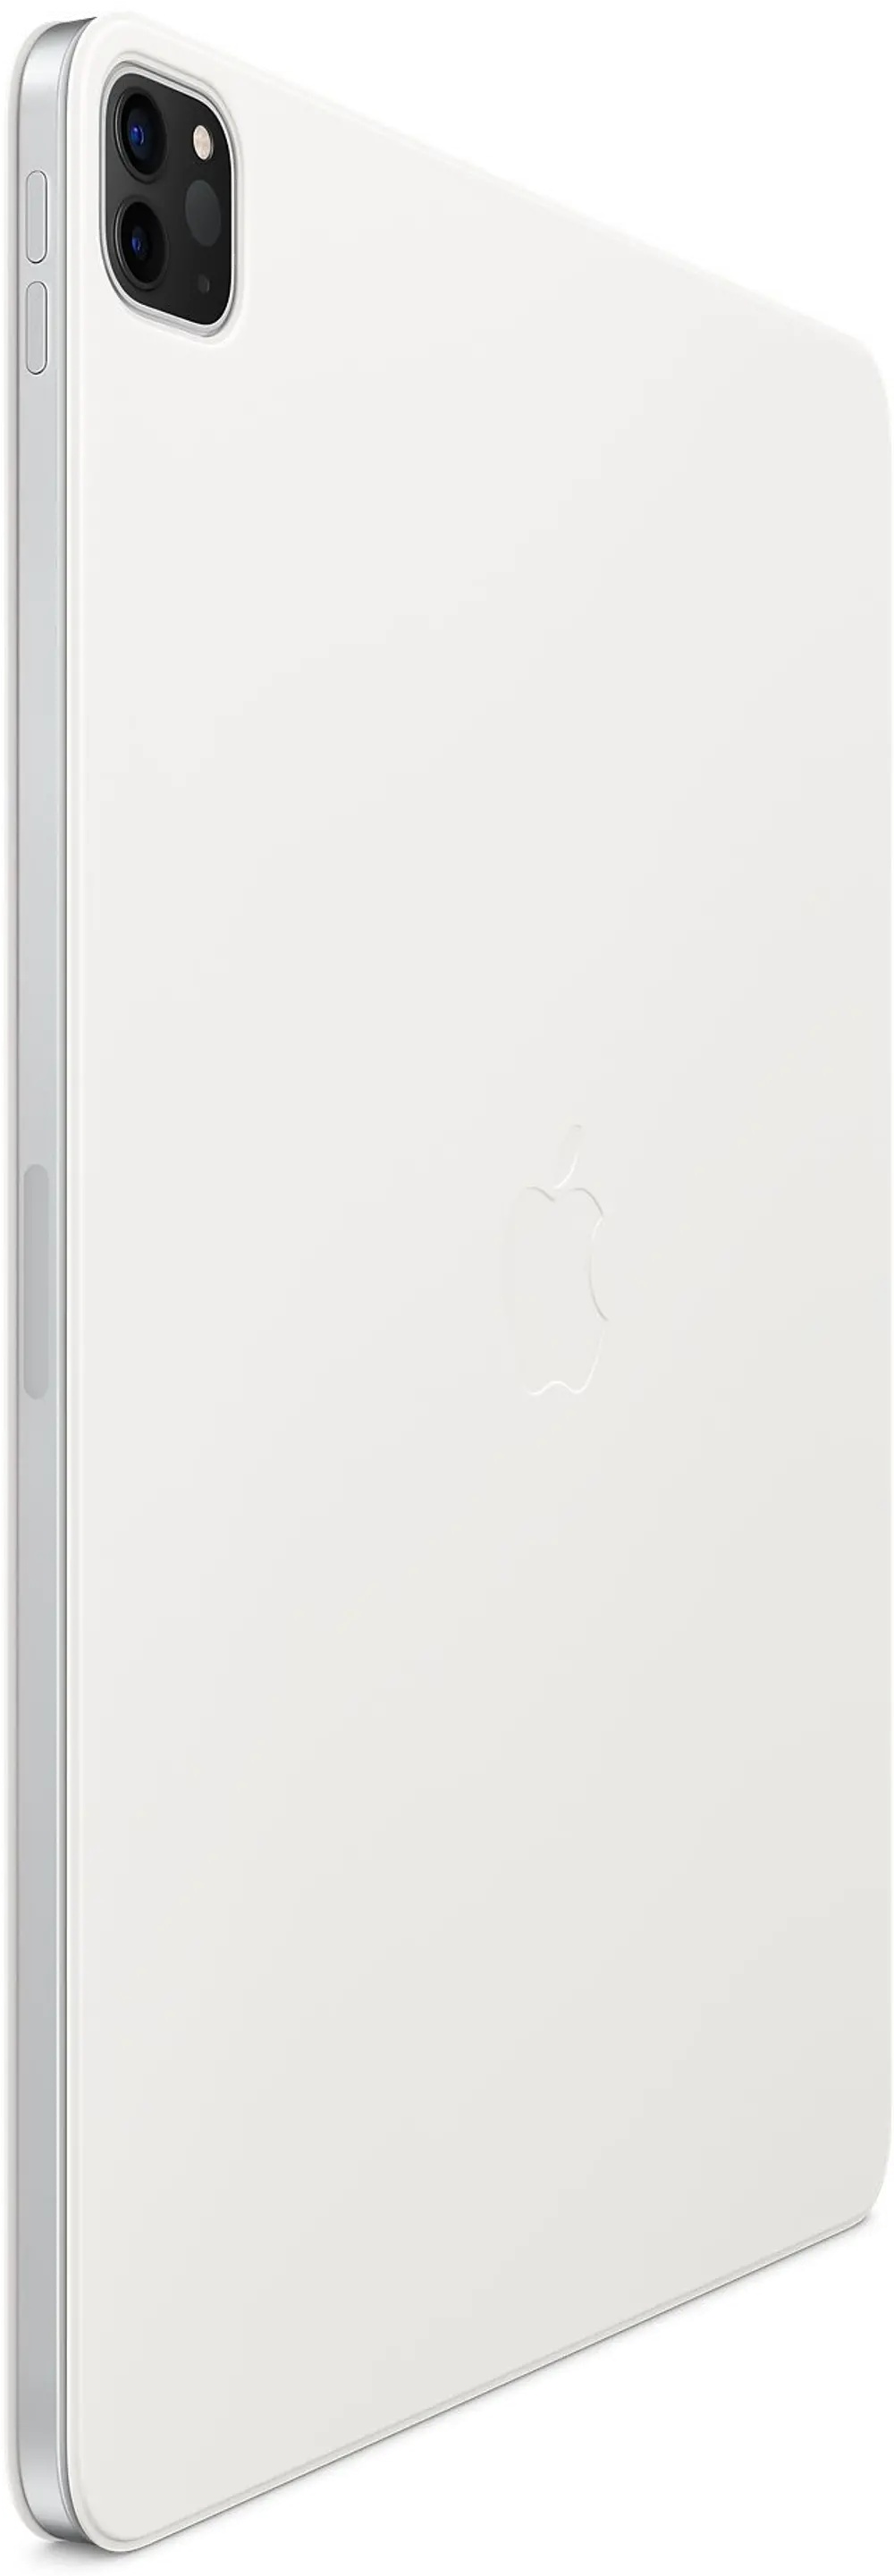 MXT82ZM/A Smart Folio Case for iPad Pro 12.9  Inch - White-1